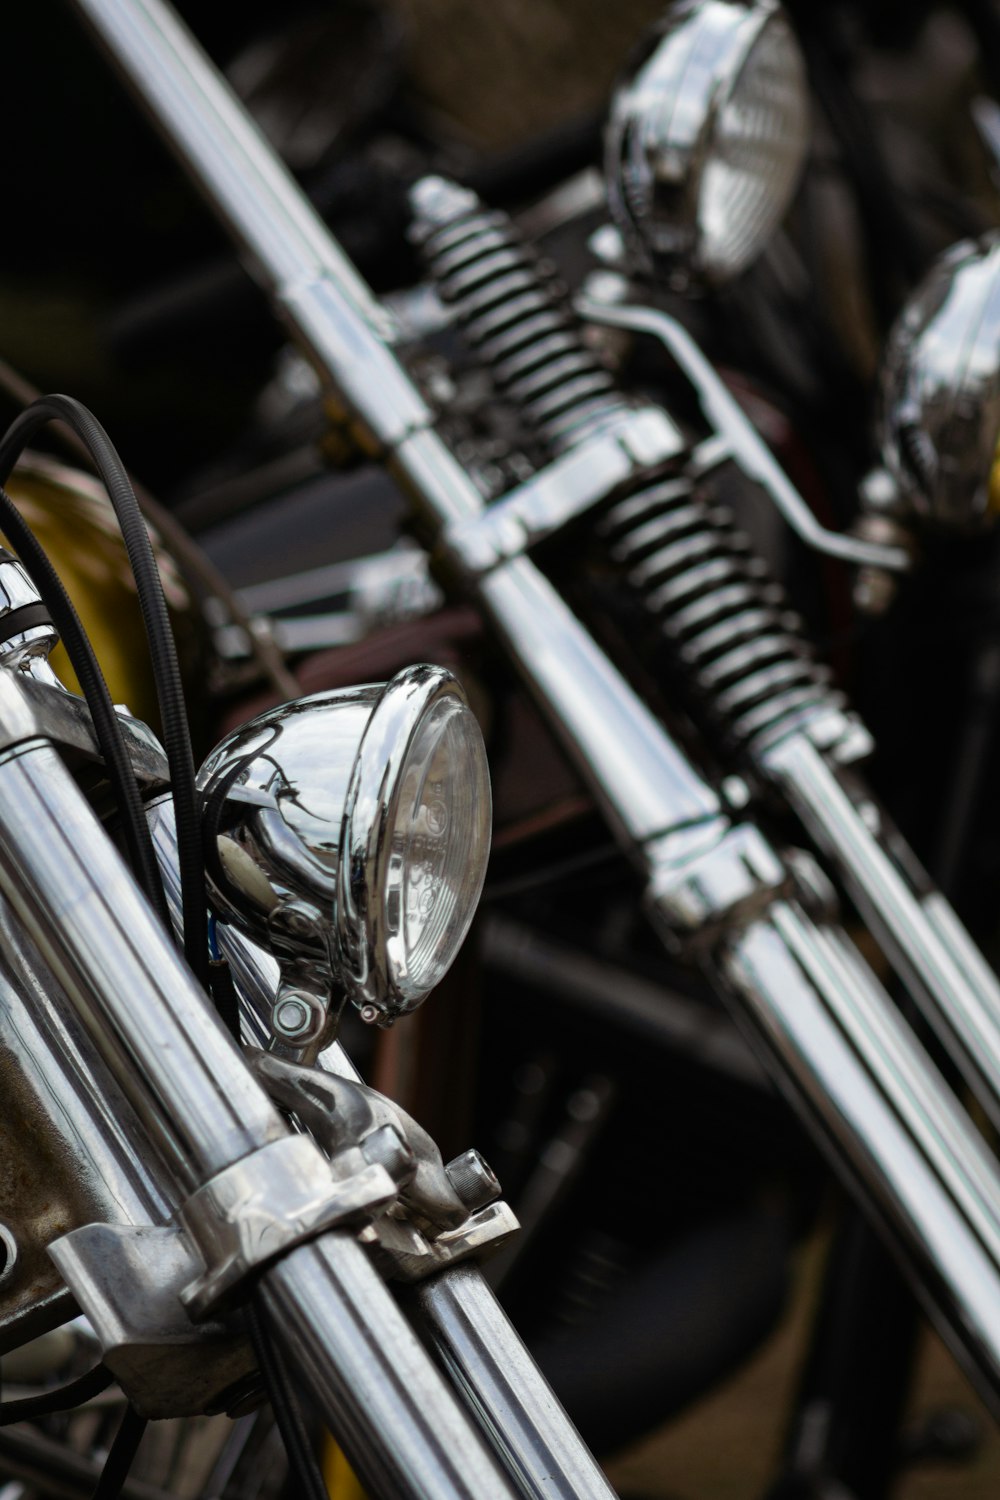 a close up of a motorcycle handlebars